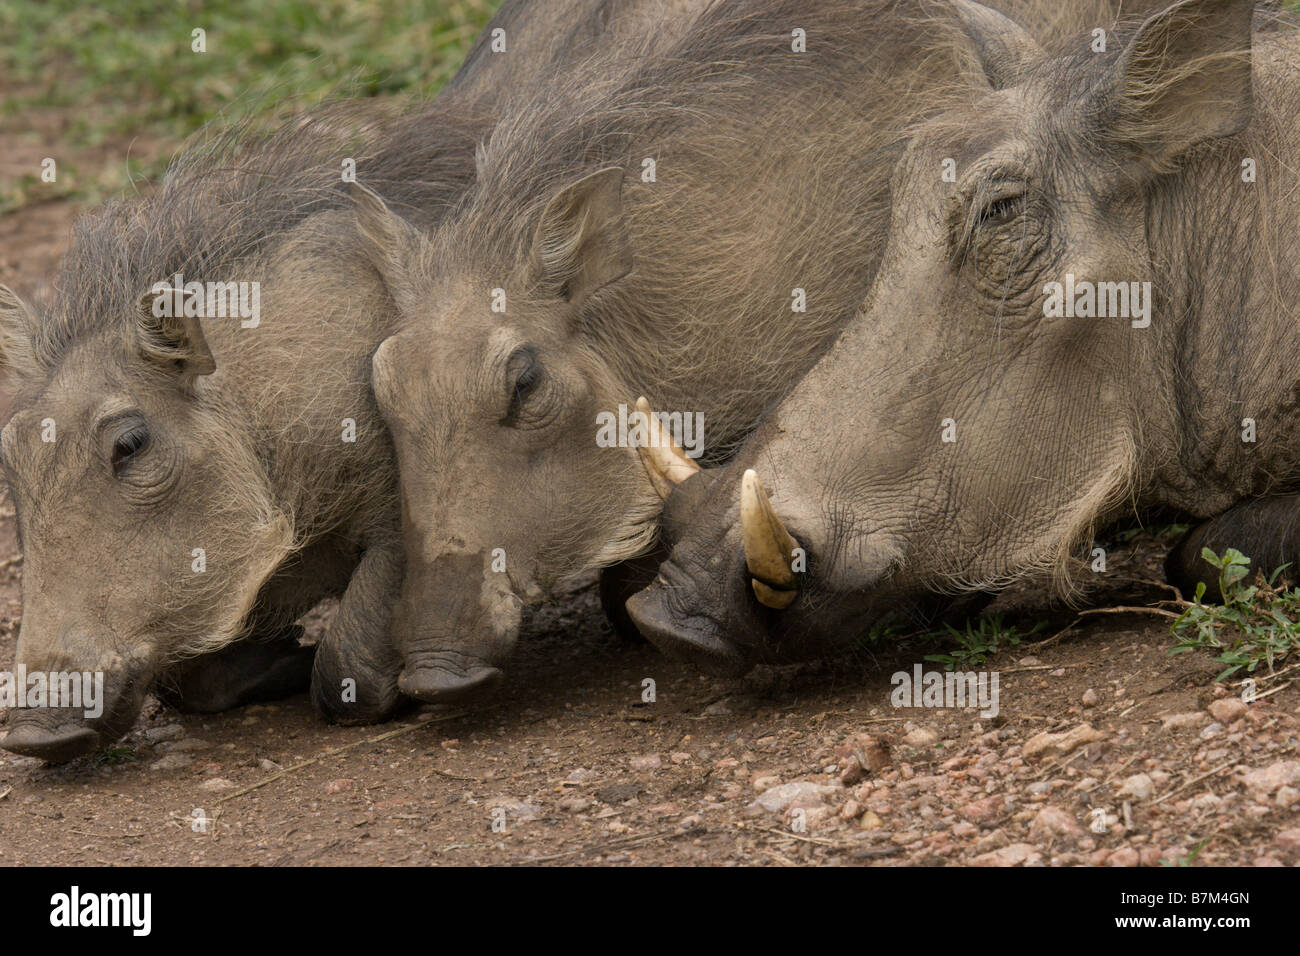 Les Porcs Porcs Porcs Sangliers sangliers sauvages bush hog Banque D'Images